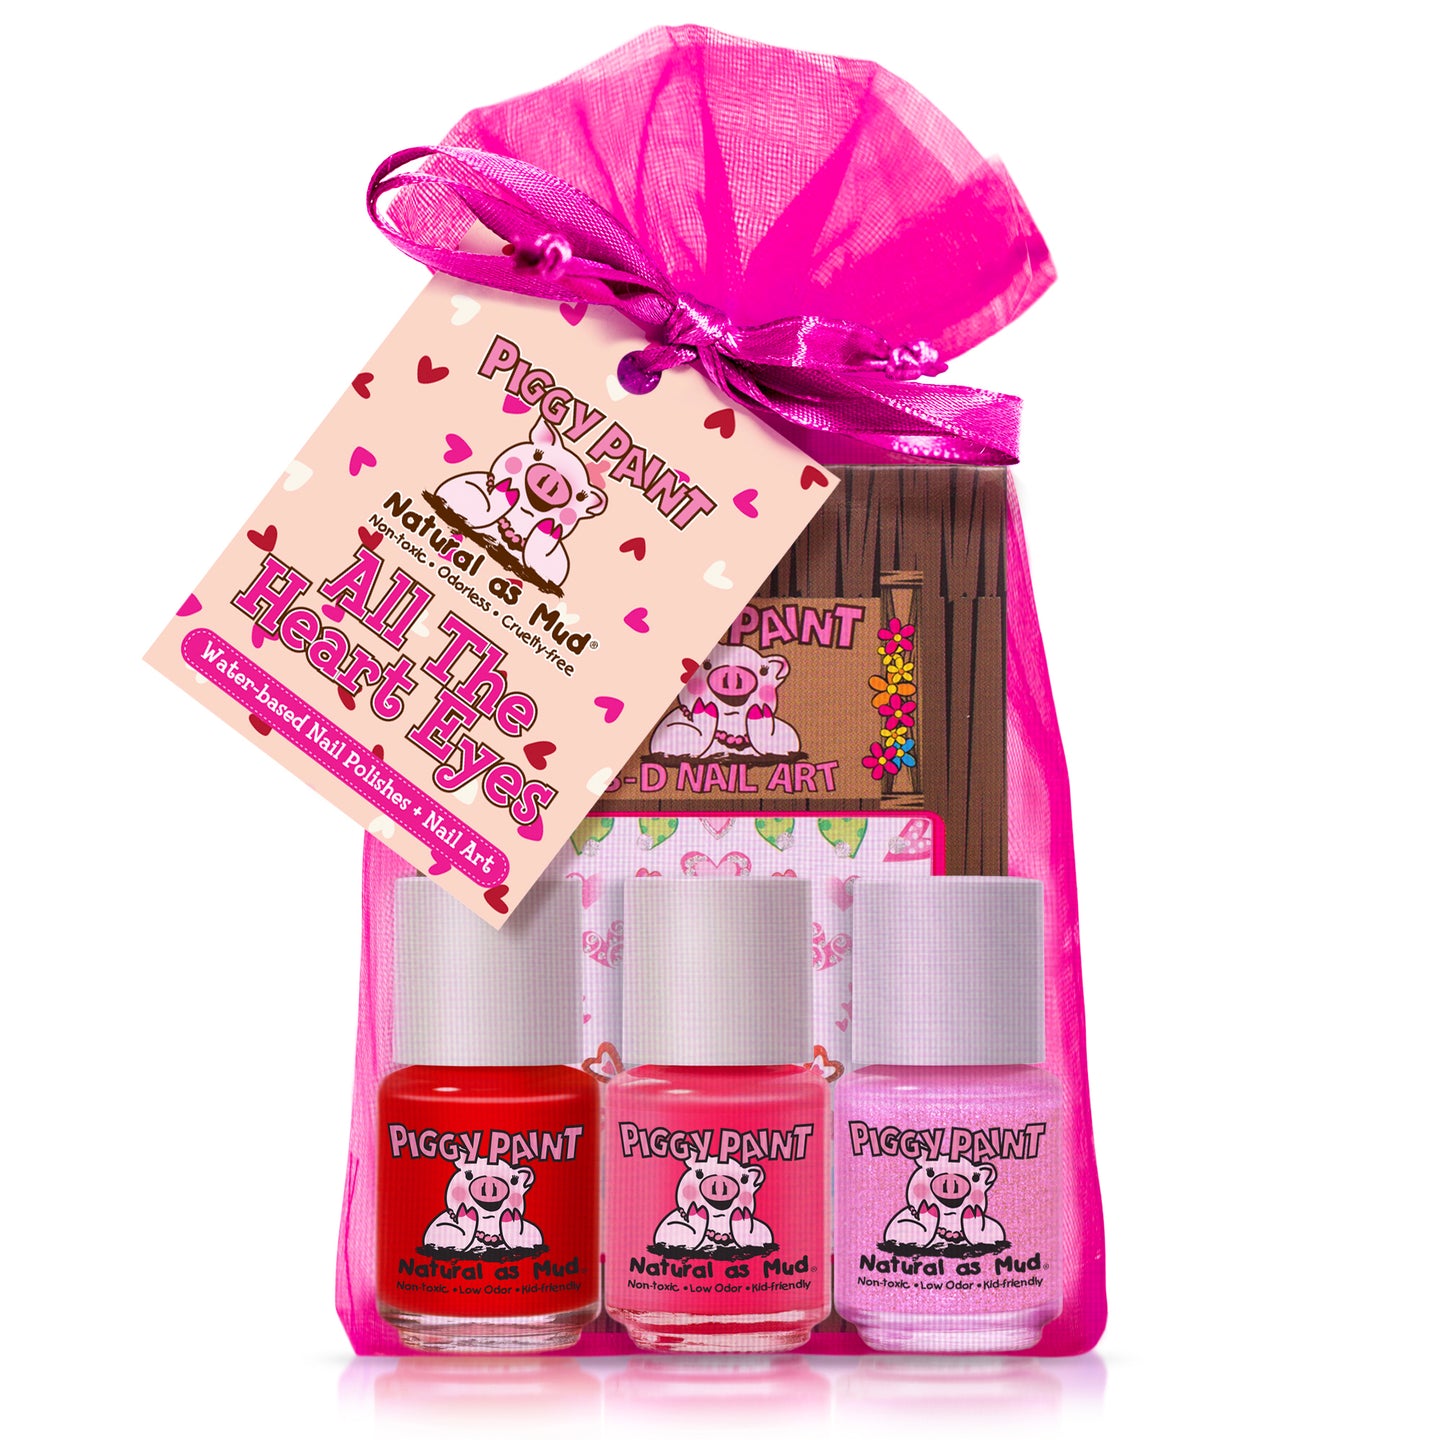 Piggy Paint Nail Polish Gift Set : All the Heart Eyes